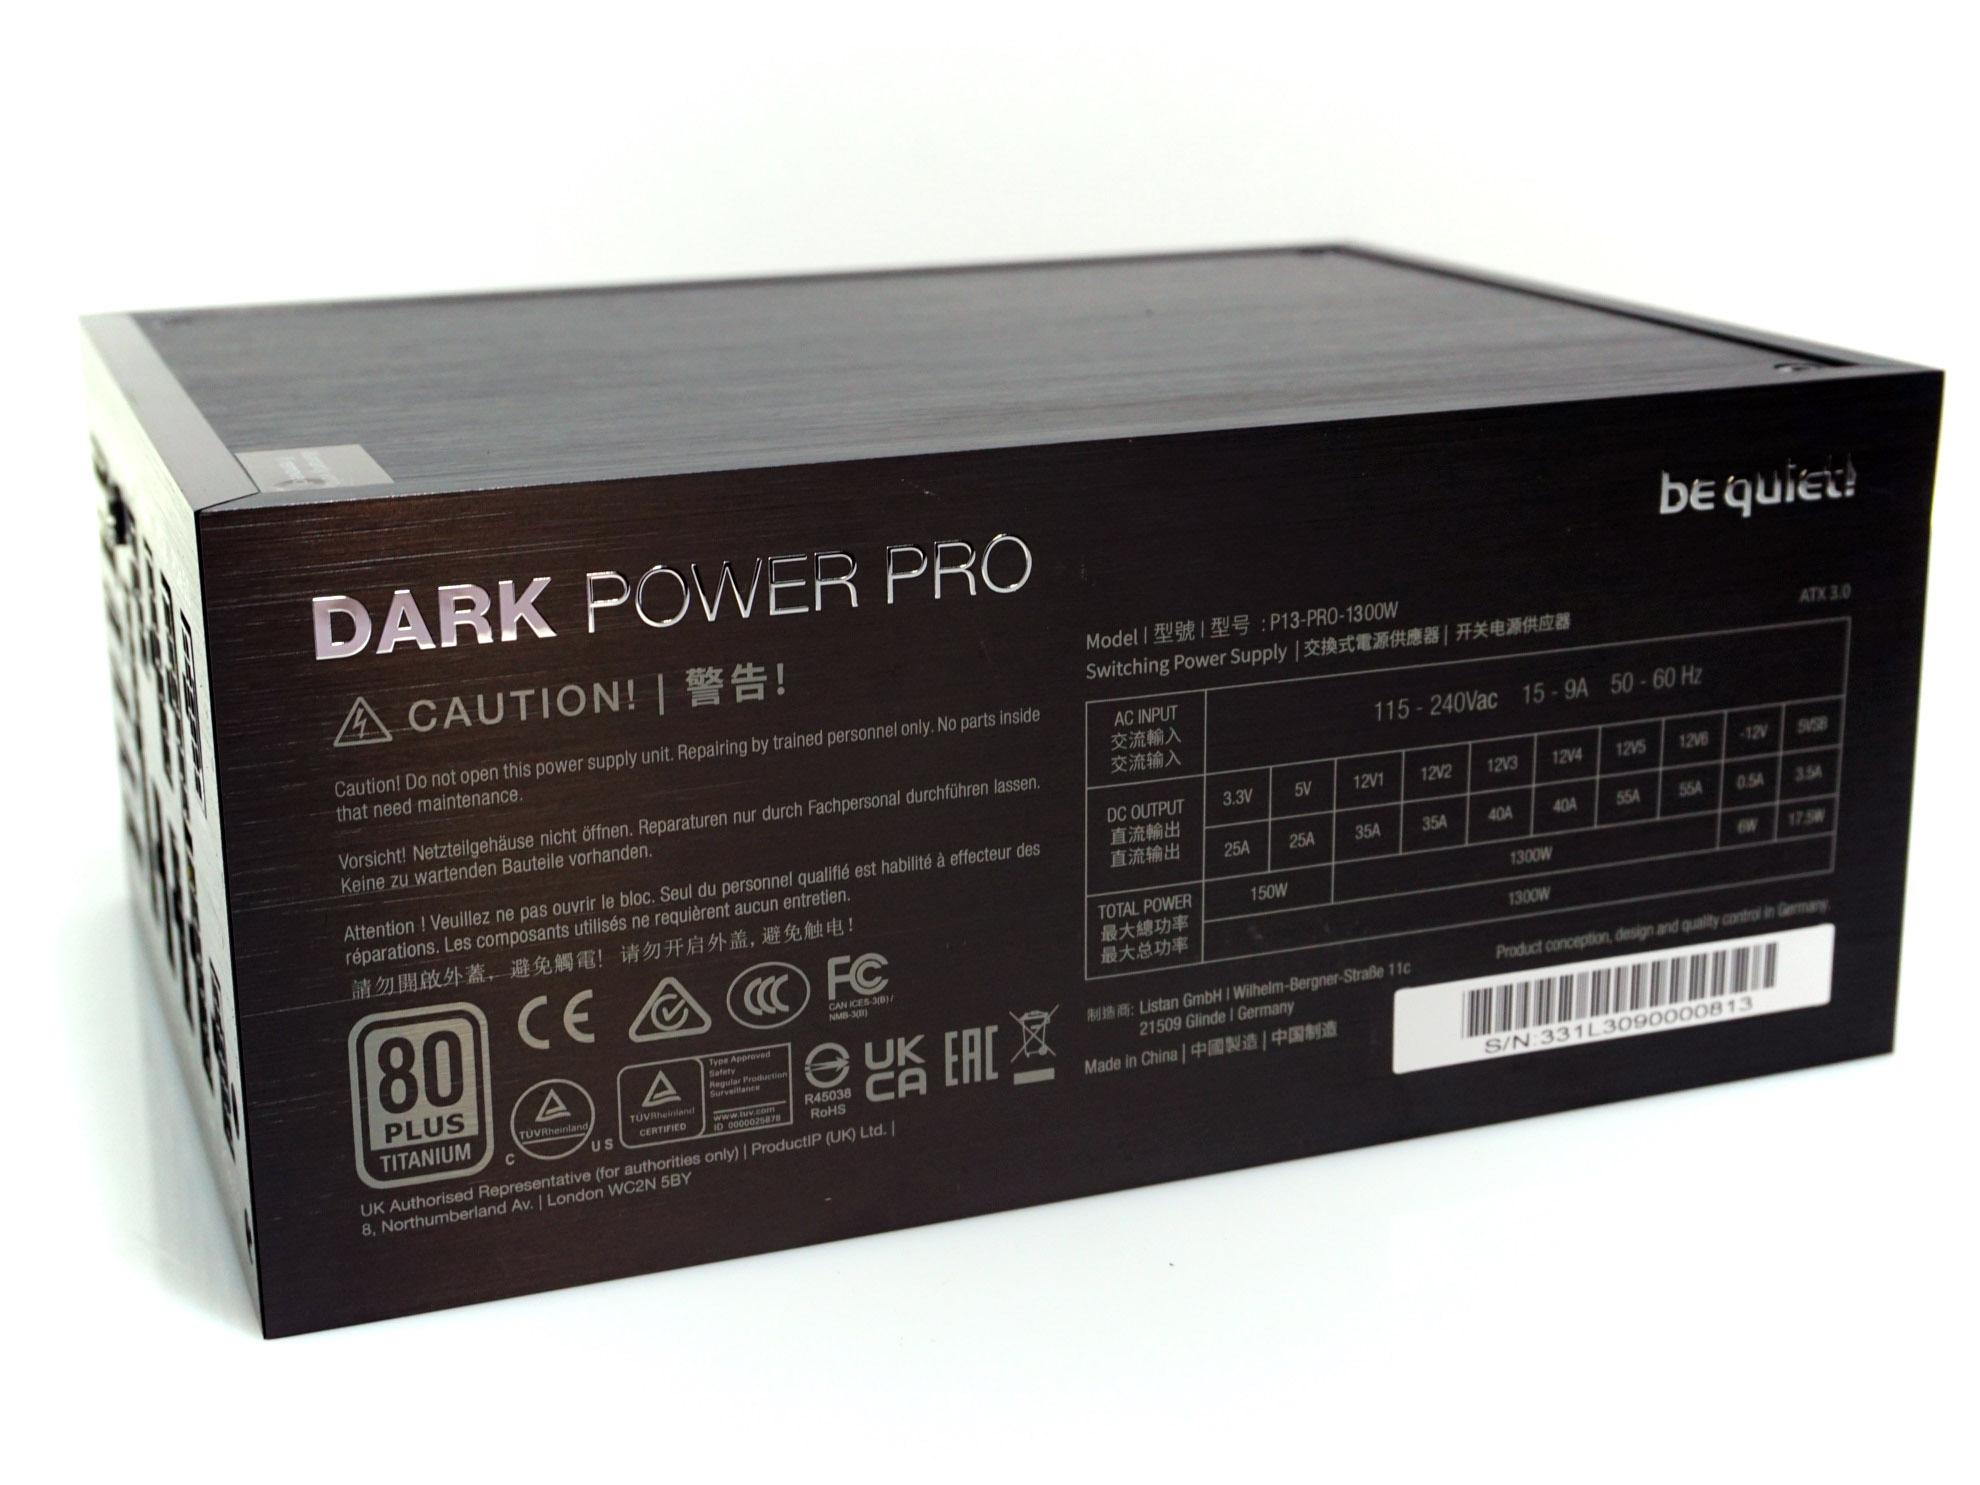  be quiet! Dark Power 13 750W Quiet Performance Power Supply, 80 Plus Titanium Efficiency, ATX 3.0, PCIe 5, Modular